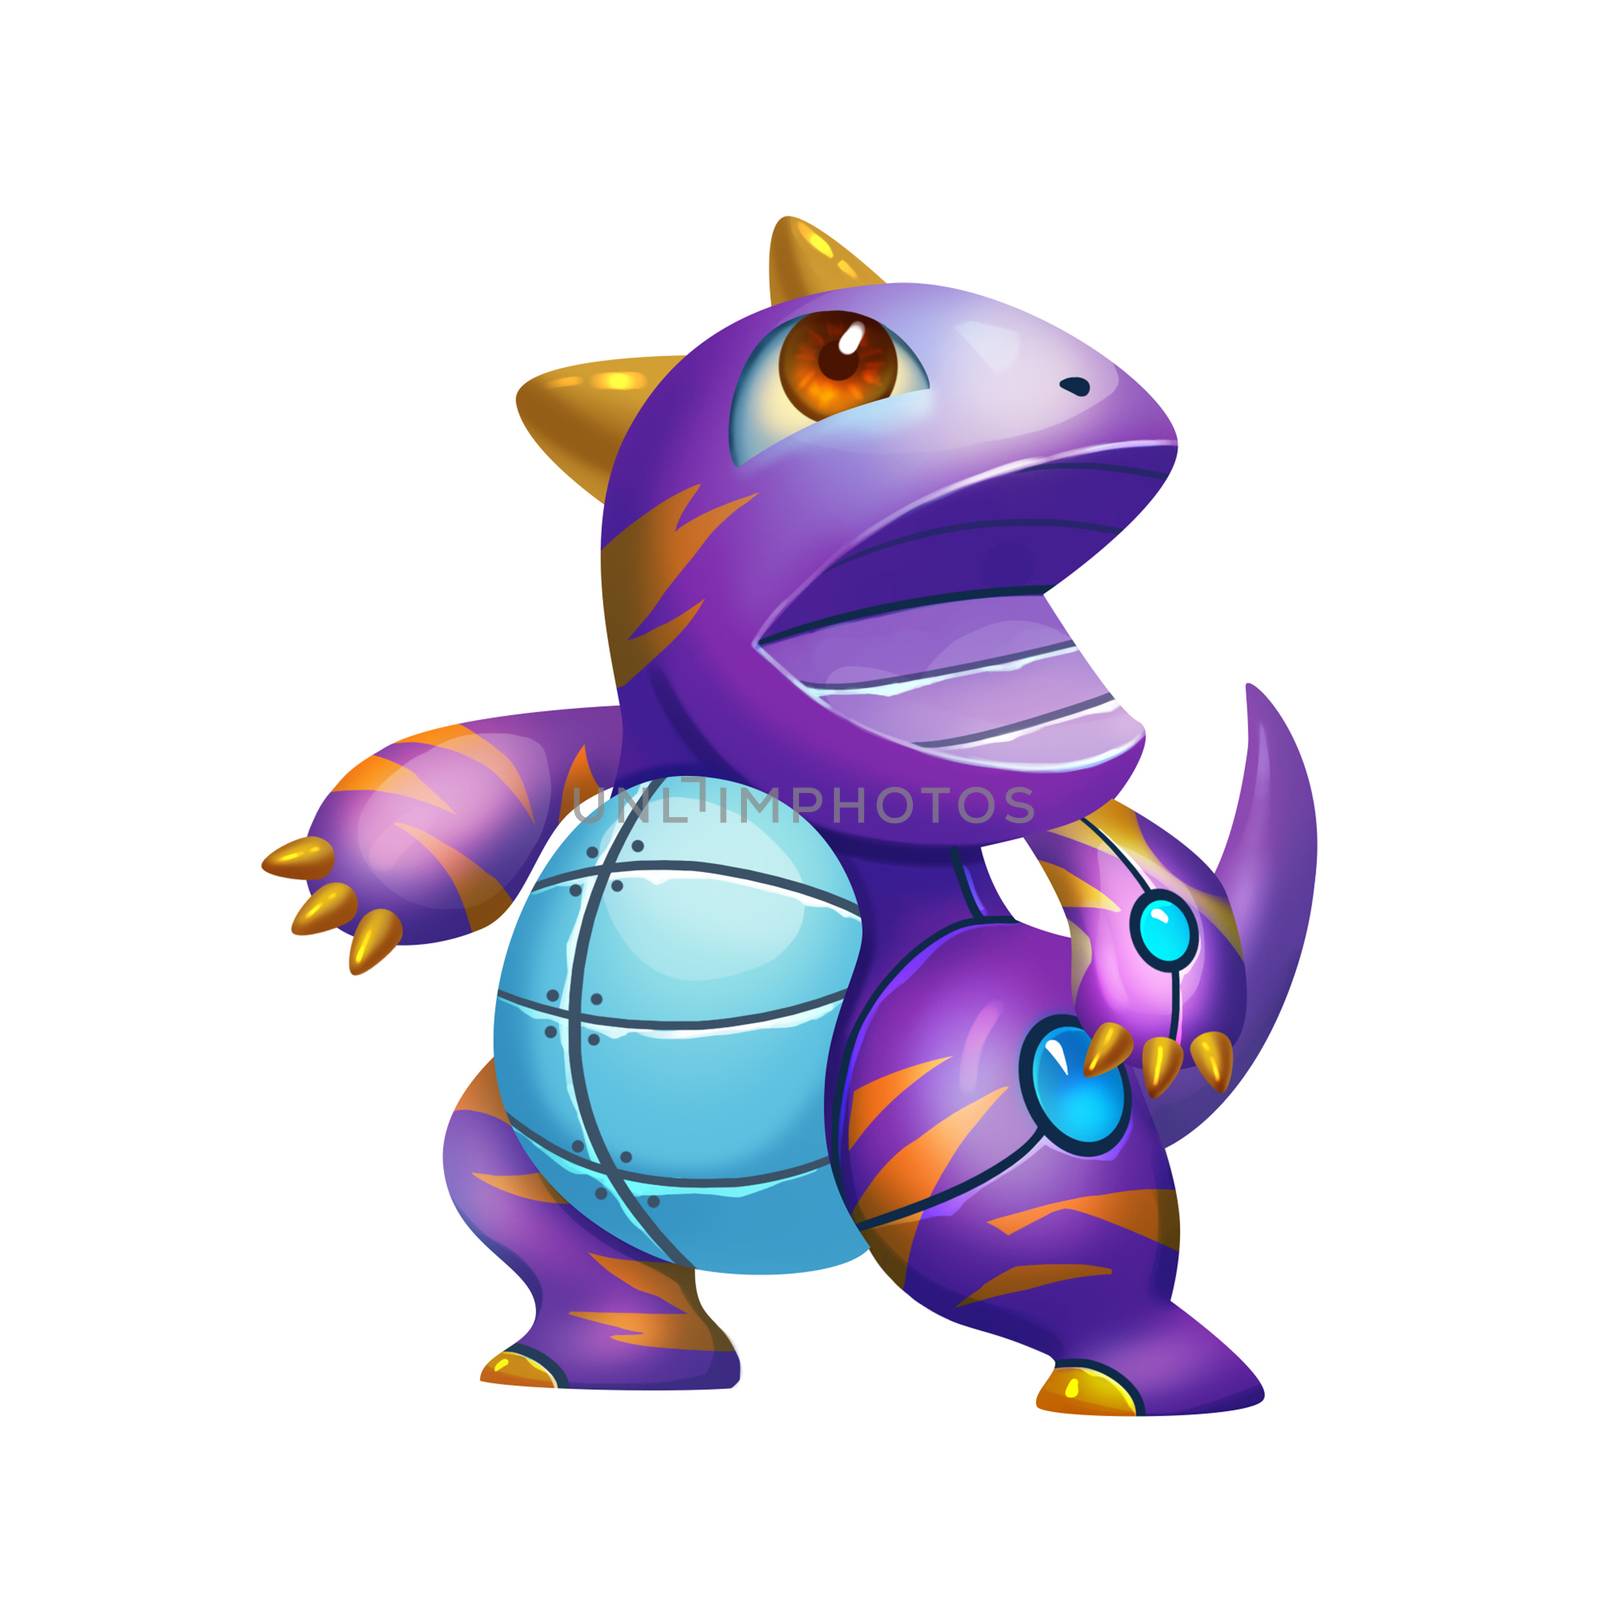 Illustration: Fantastic Theme - The Purple Dinosaur - Element Creation/Character Design - Realistic / Cartoon Style by NextMars